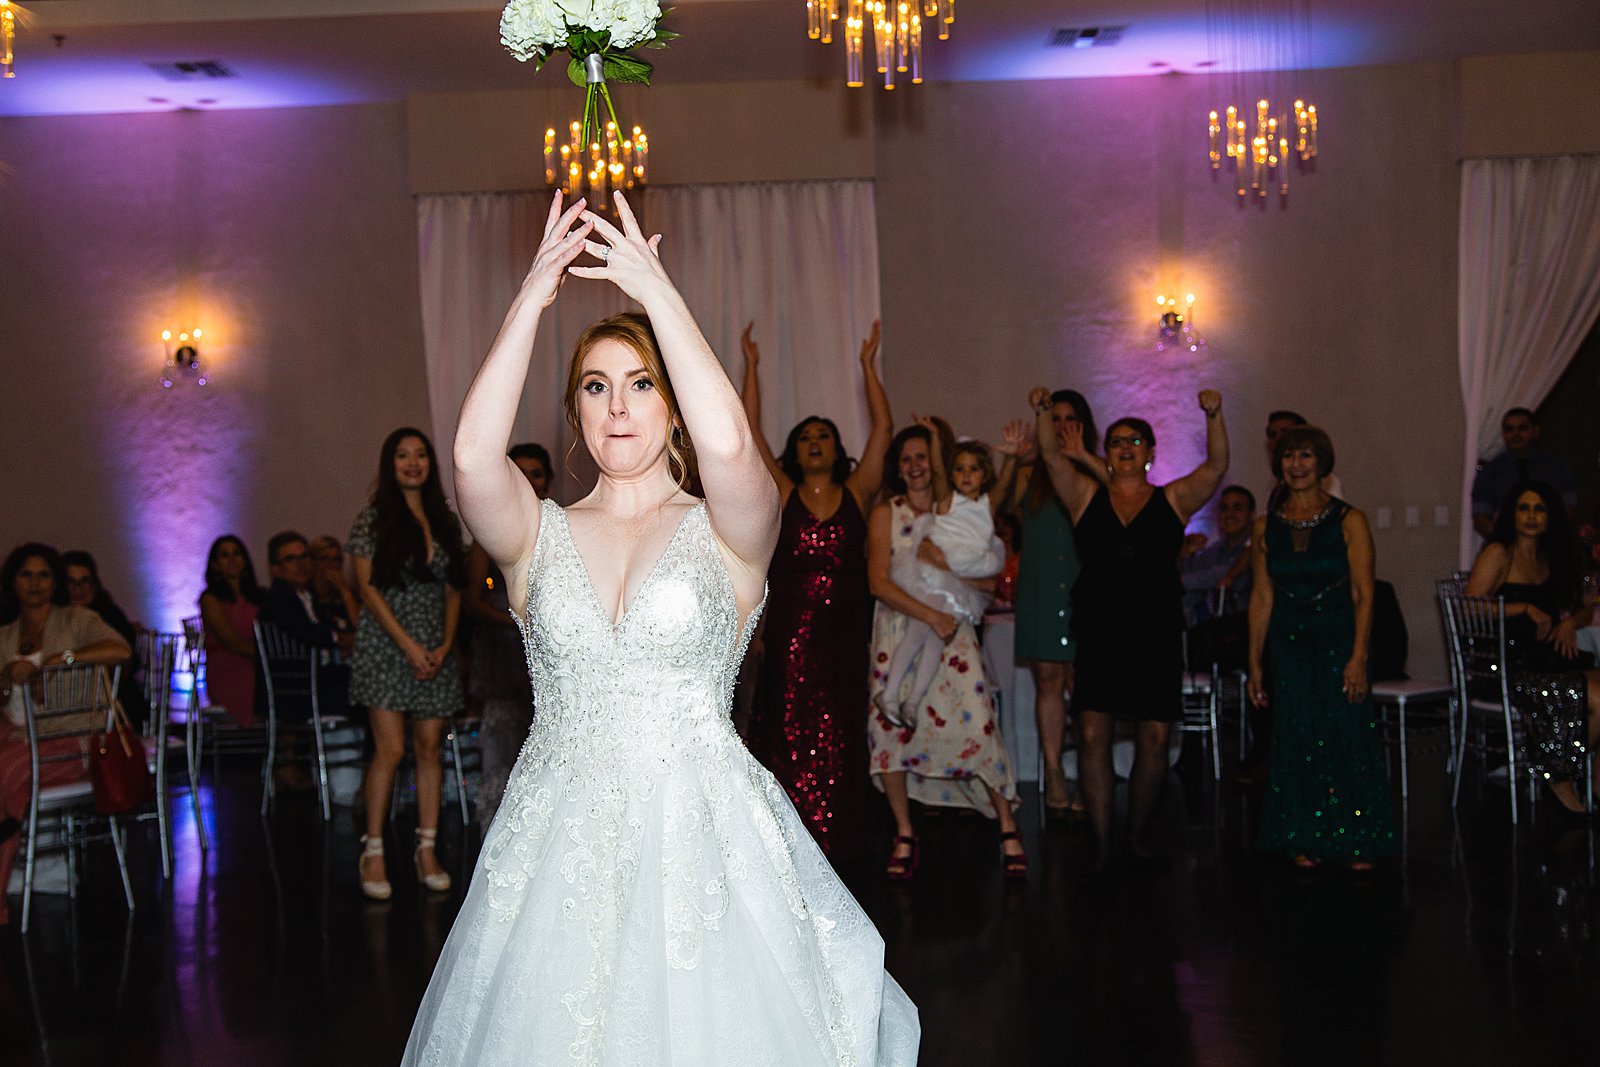 Bouquet toss at SoHo63 wedding reception by Chandler wedding photographer PMA Photography.